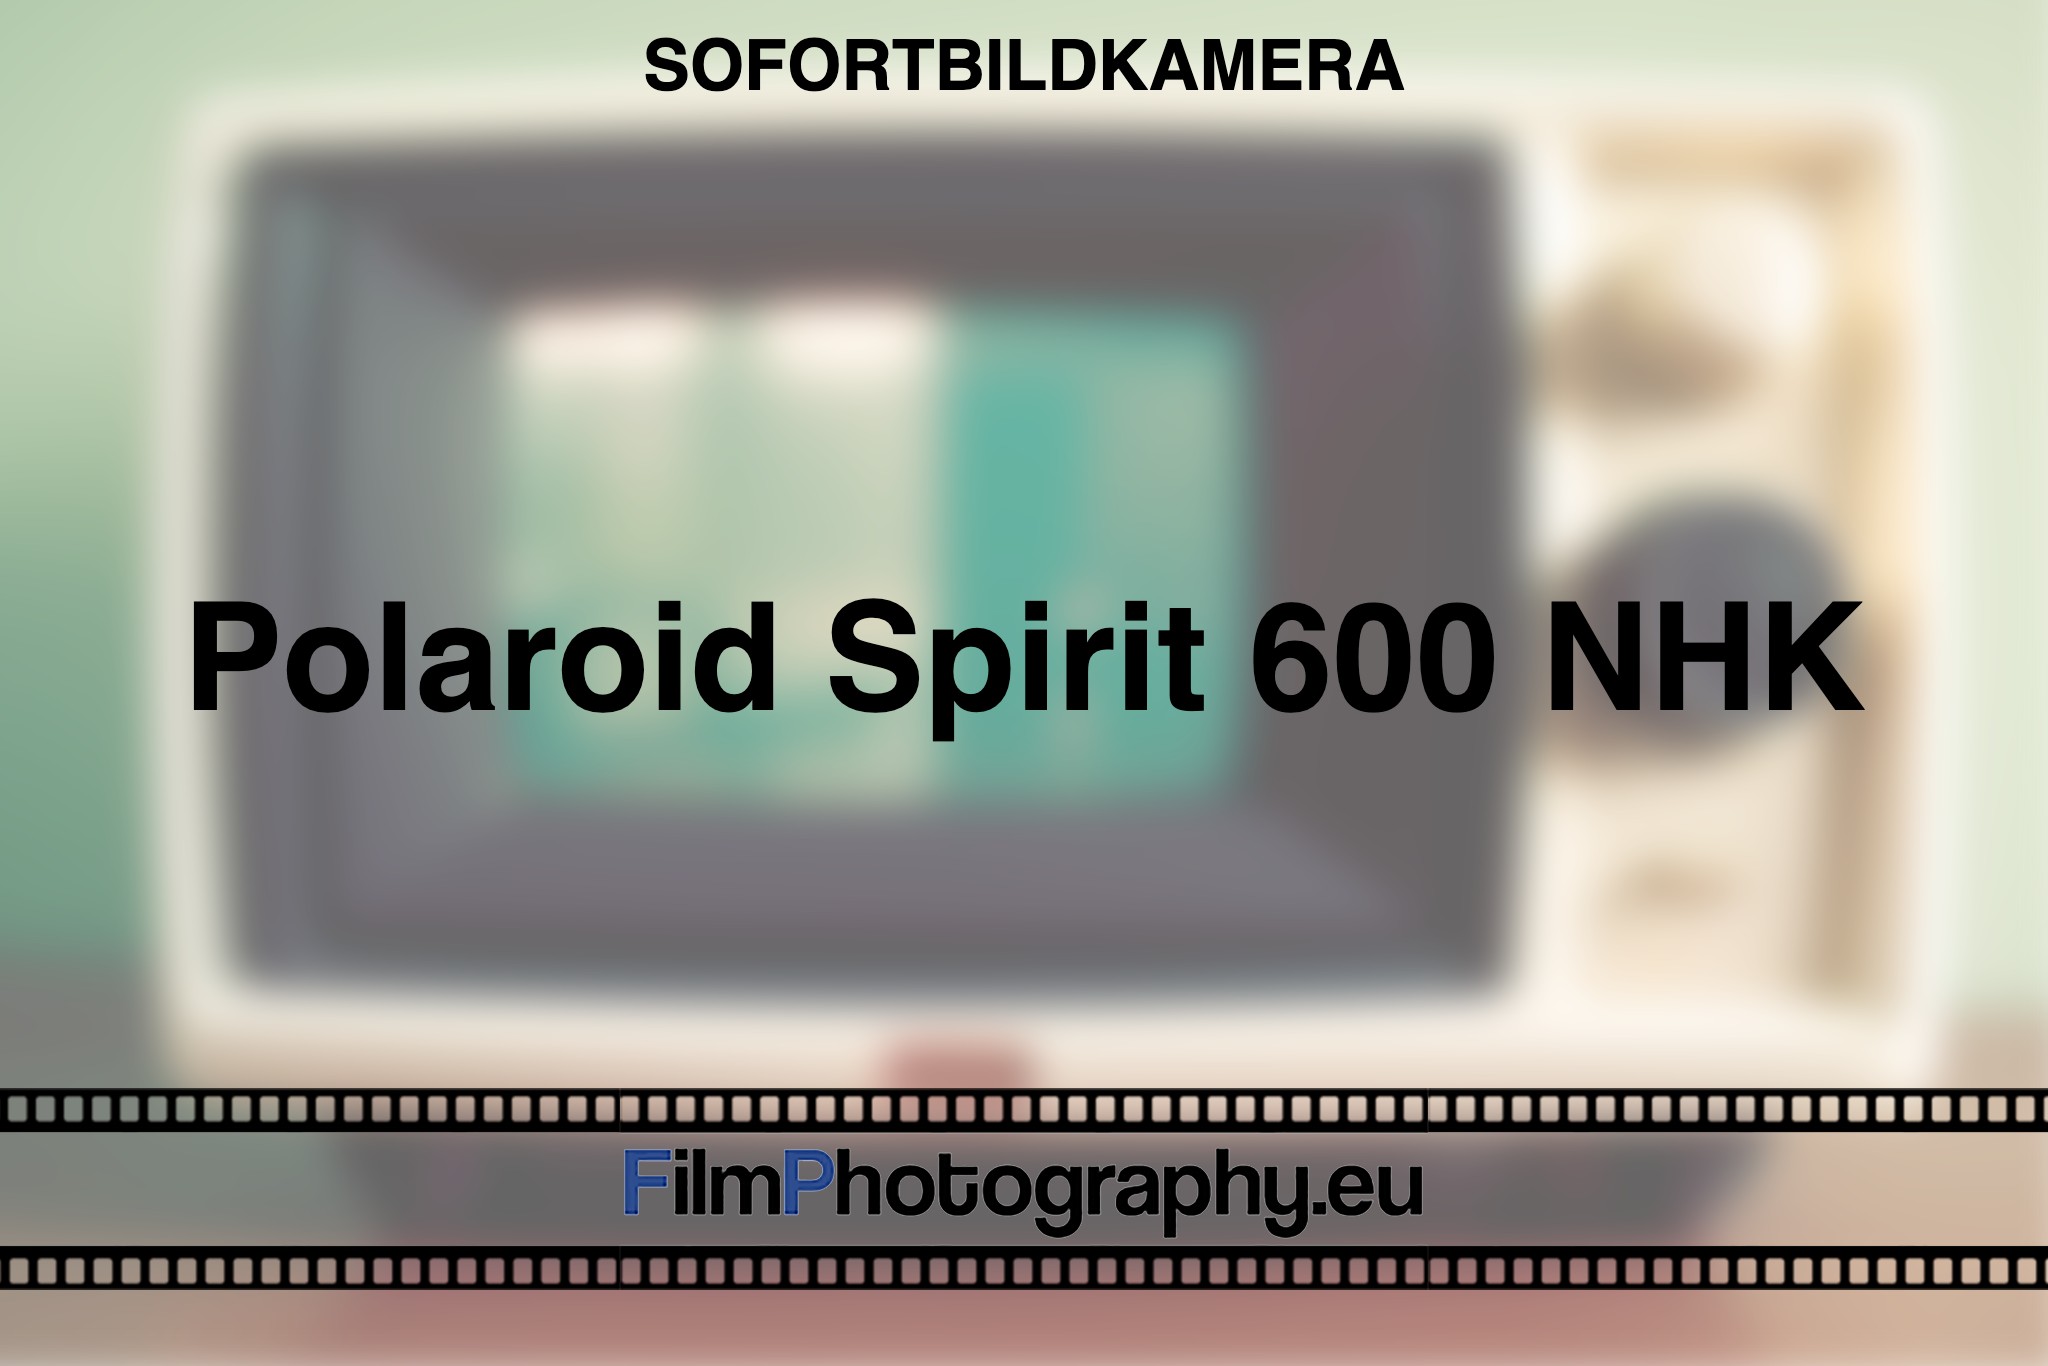 polaroid-spirit-600-nhk-sofortbildkamera-fp-bnv